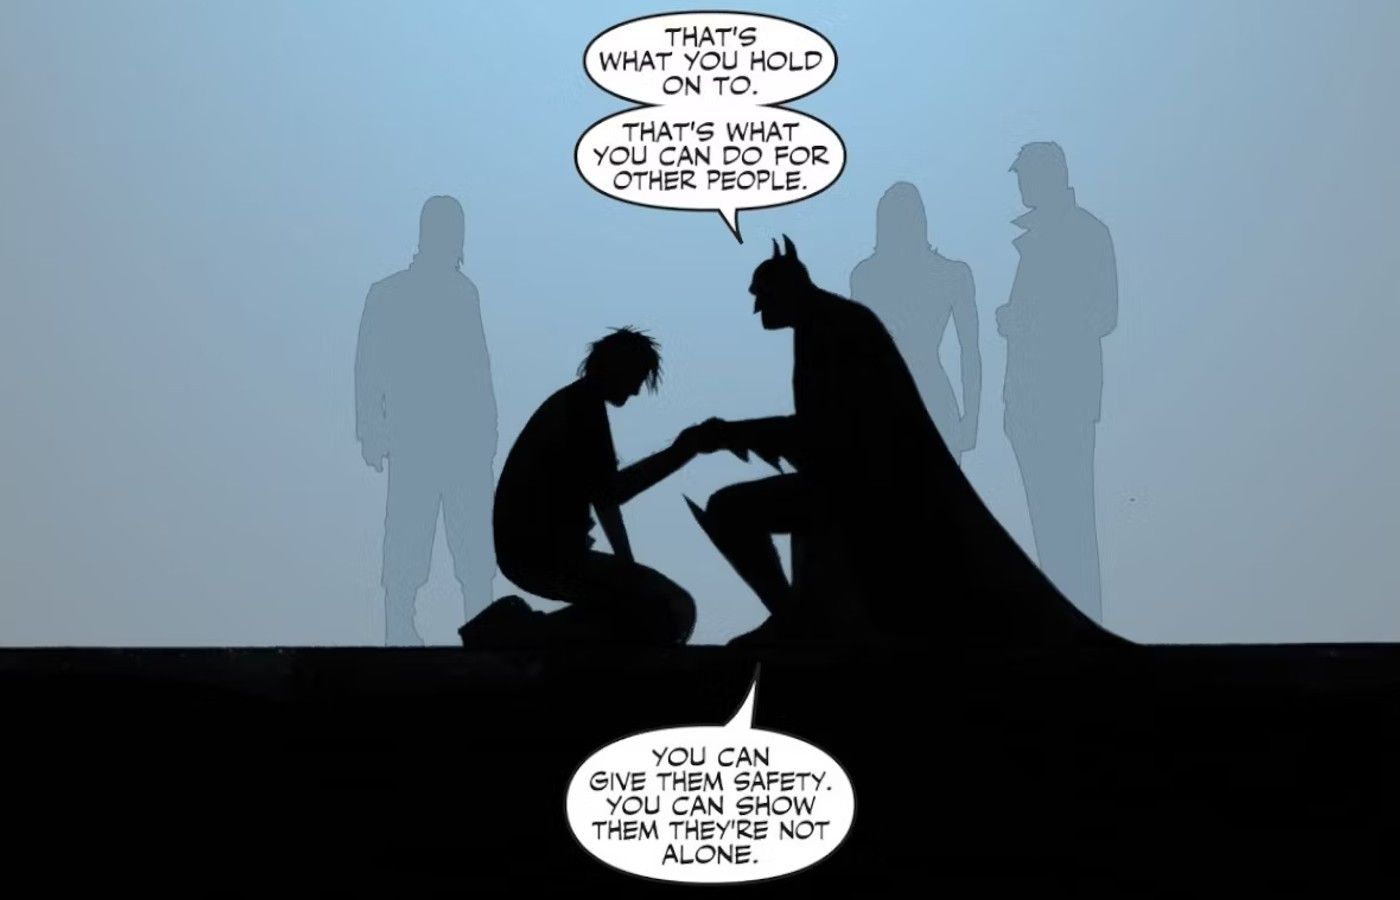 Comic book panel: Batman kneels before a boy in order to help him.